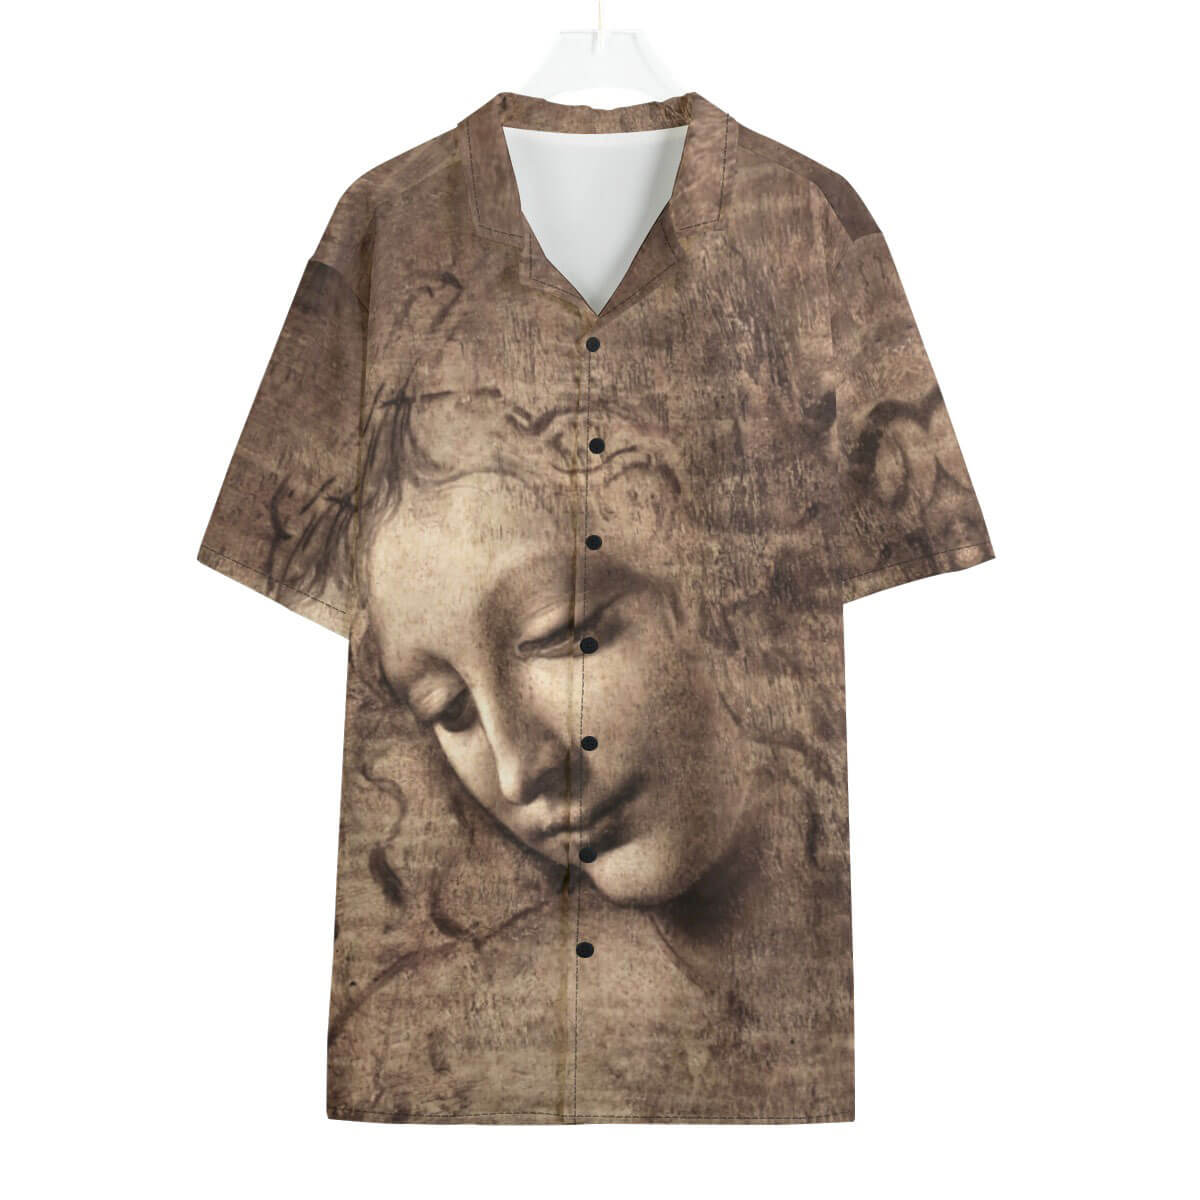 Head of a Woman by Leonardo da Vinci Shirt worn by art enthusiast in museum